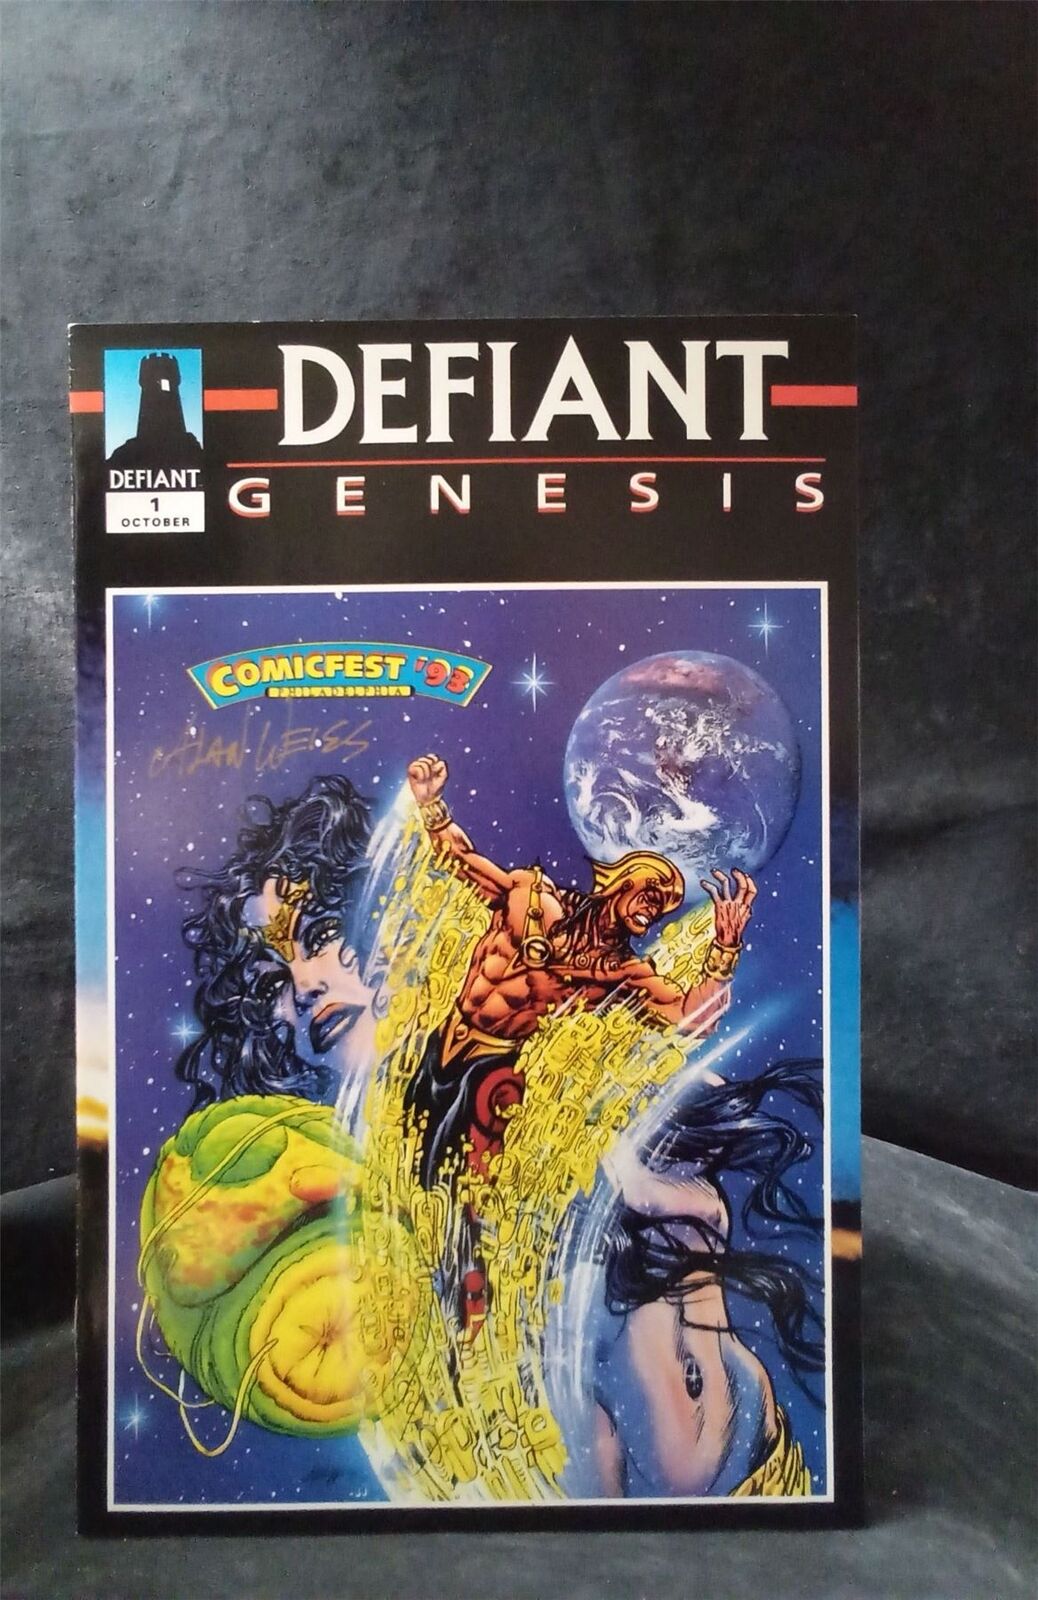 Defiant Genesis #1 Comicfest 93 Philadelphia w/ signed trading cards  Comic Book